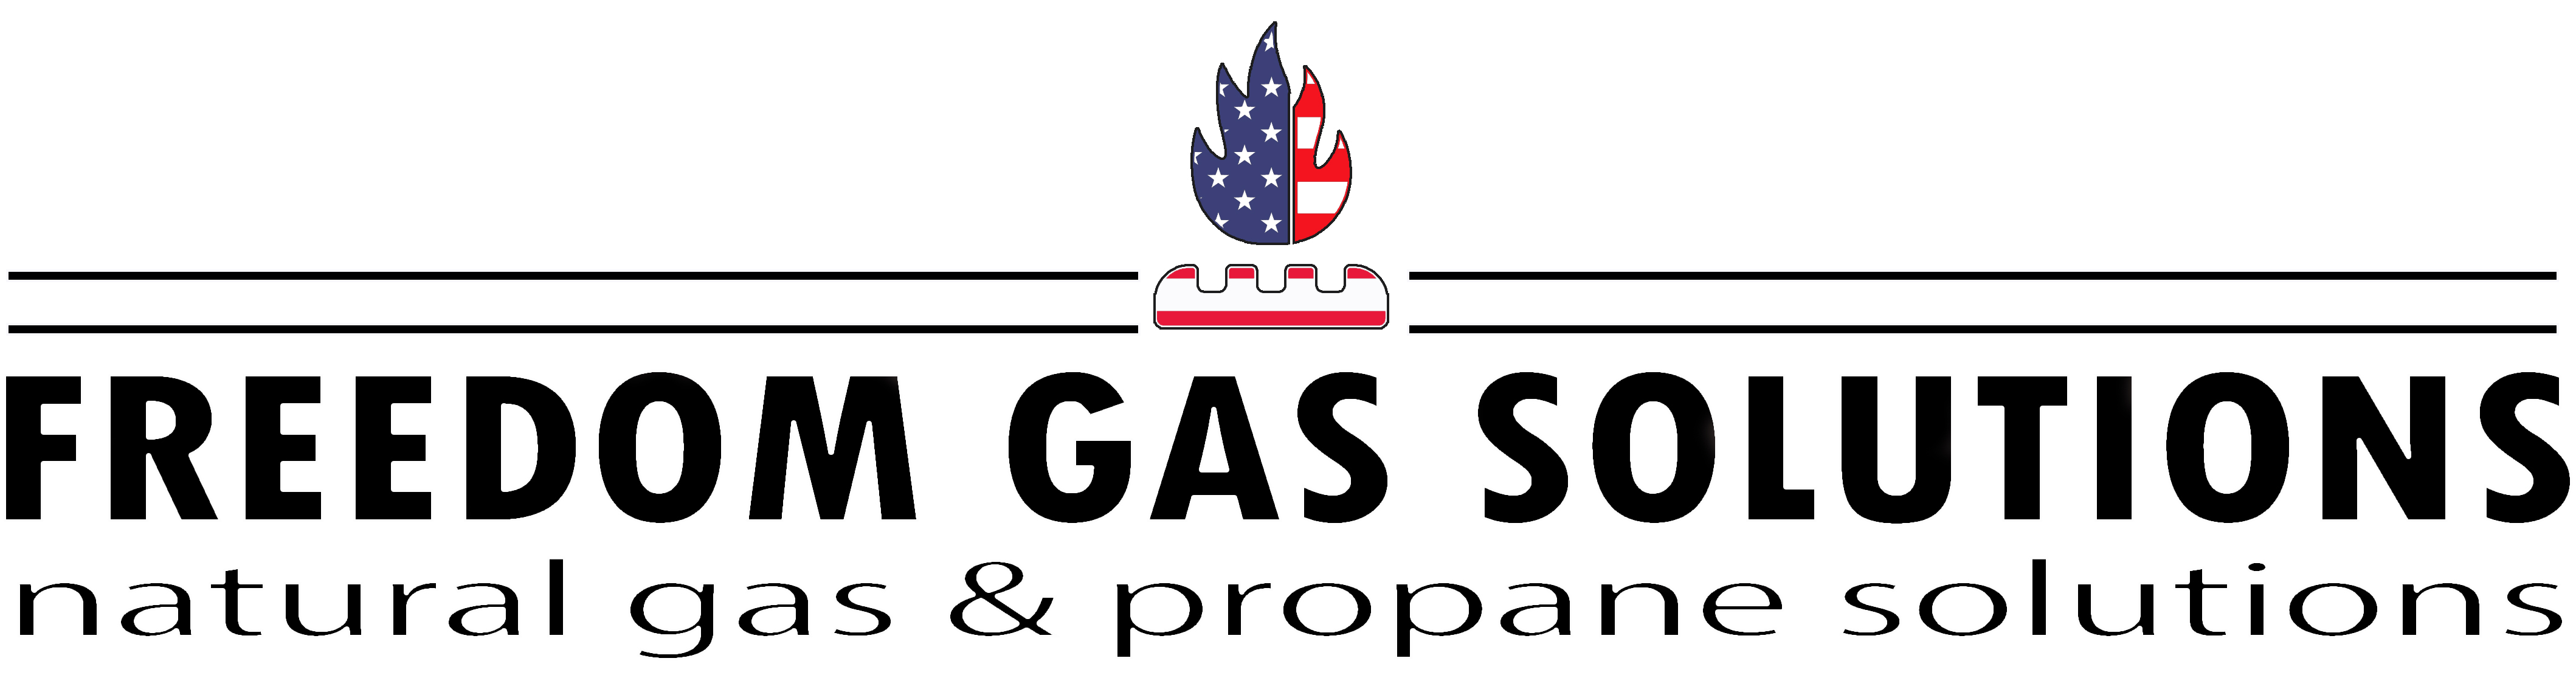 Freedom Gas Solutions Logo